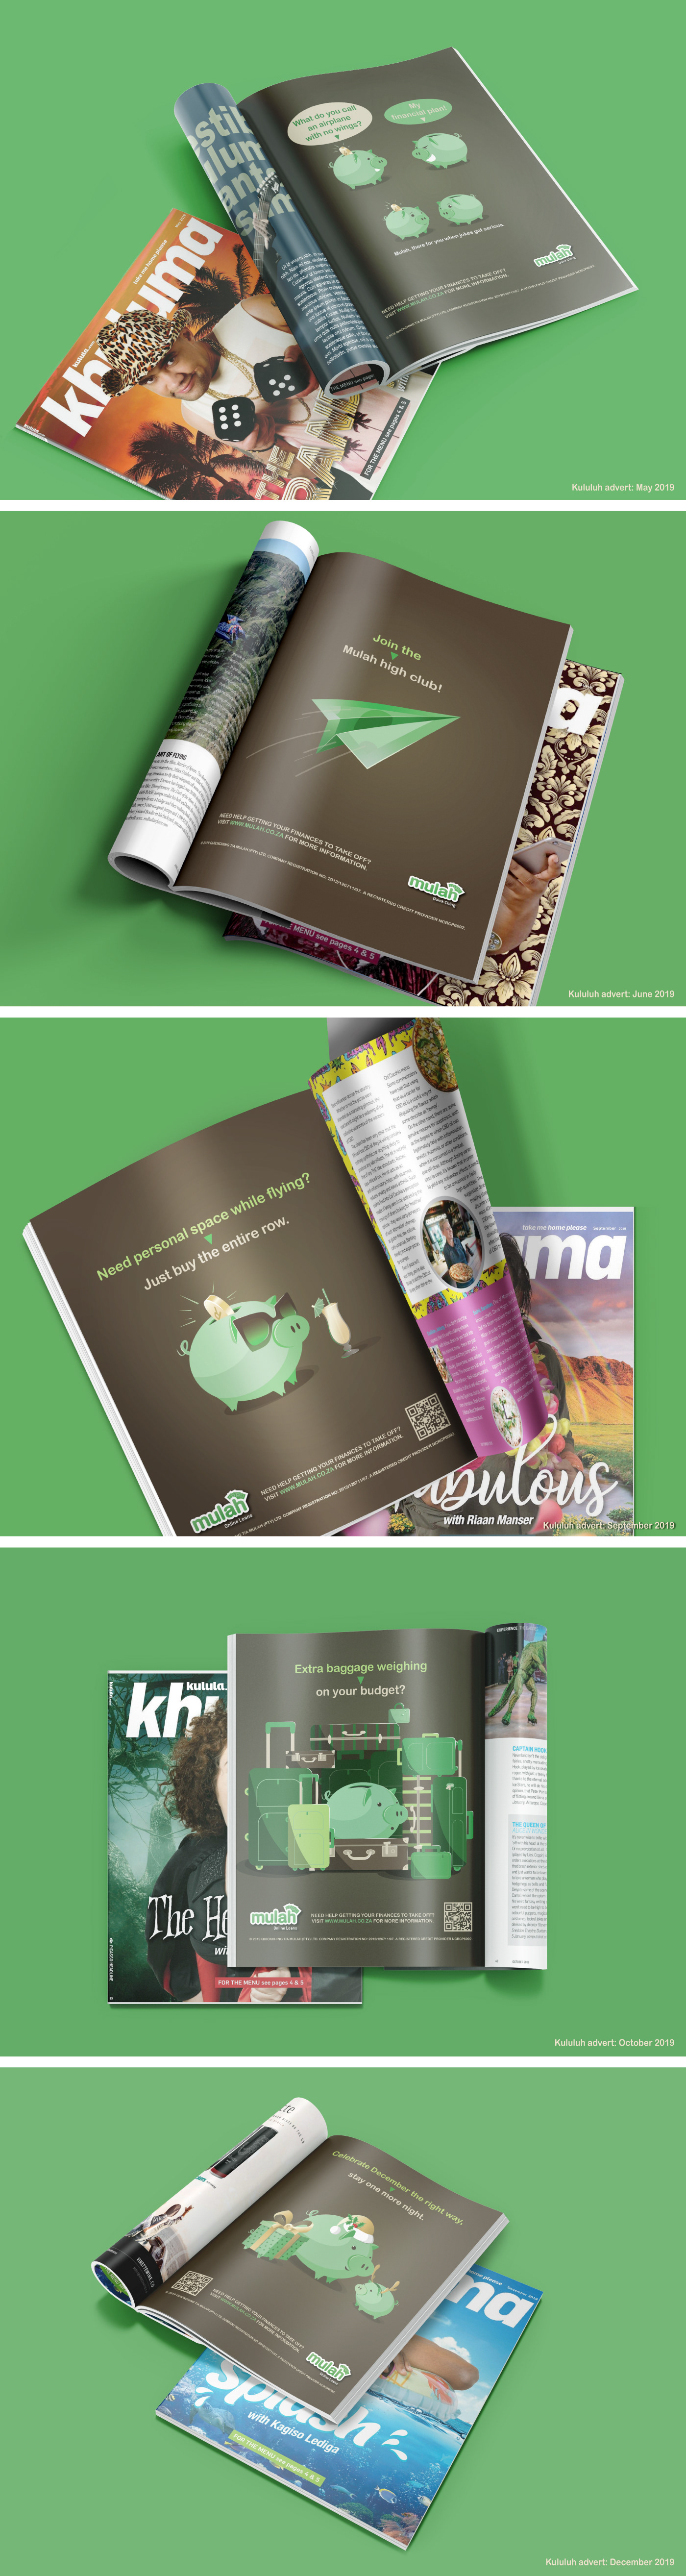 Advertising  kulula khuluma magazine mulah pig loans